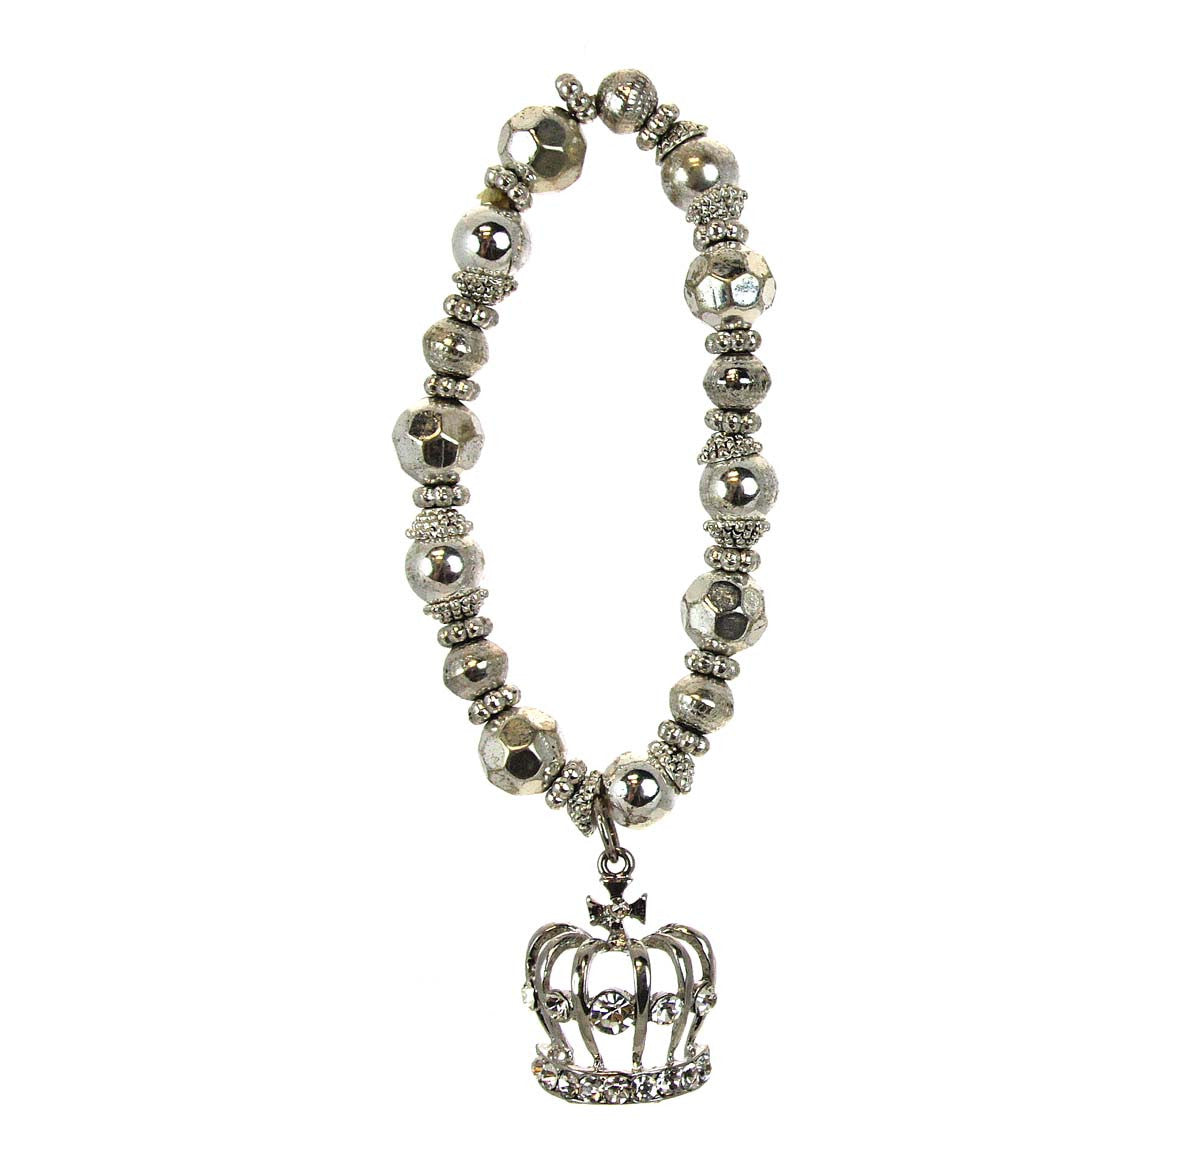 Bracelet with Crown Charm